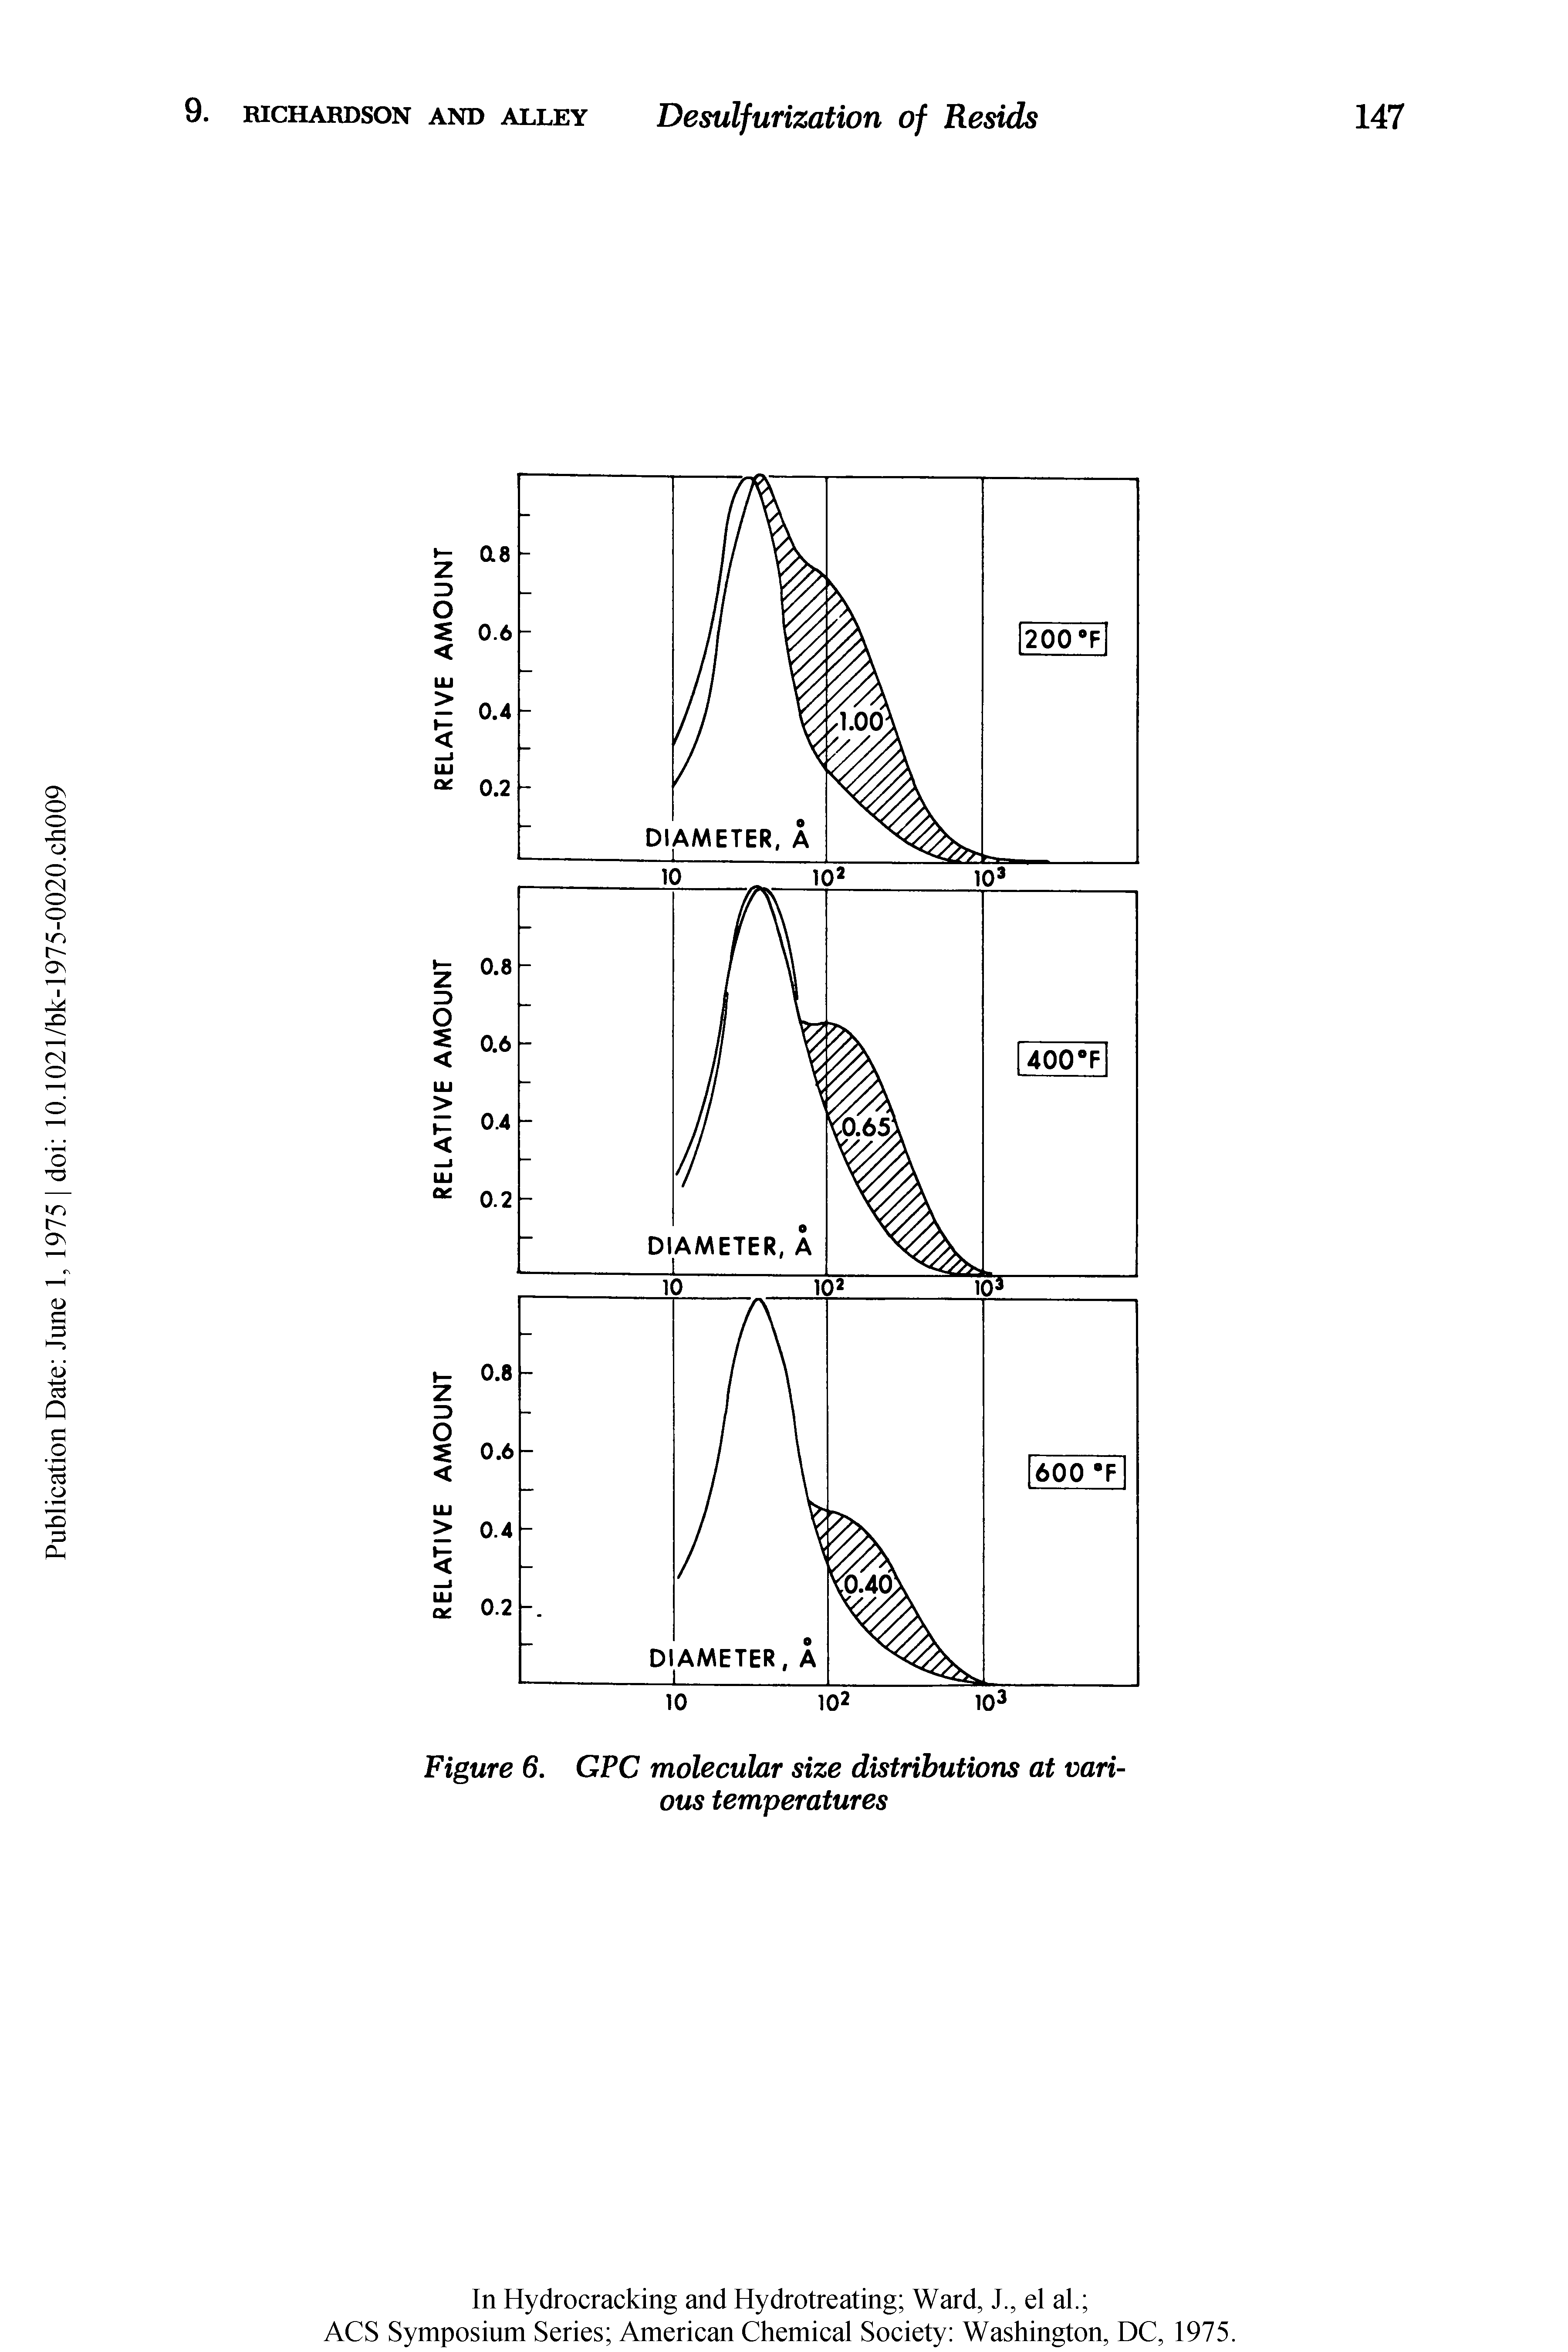 Figure 6. GPC molecular size distributions at various temperatures...